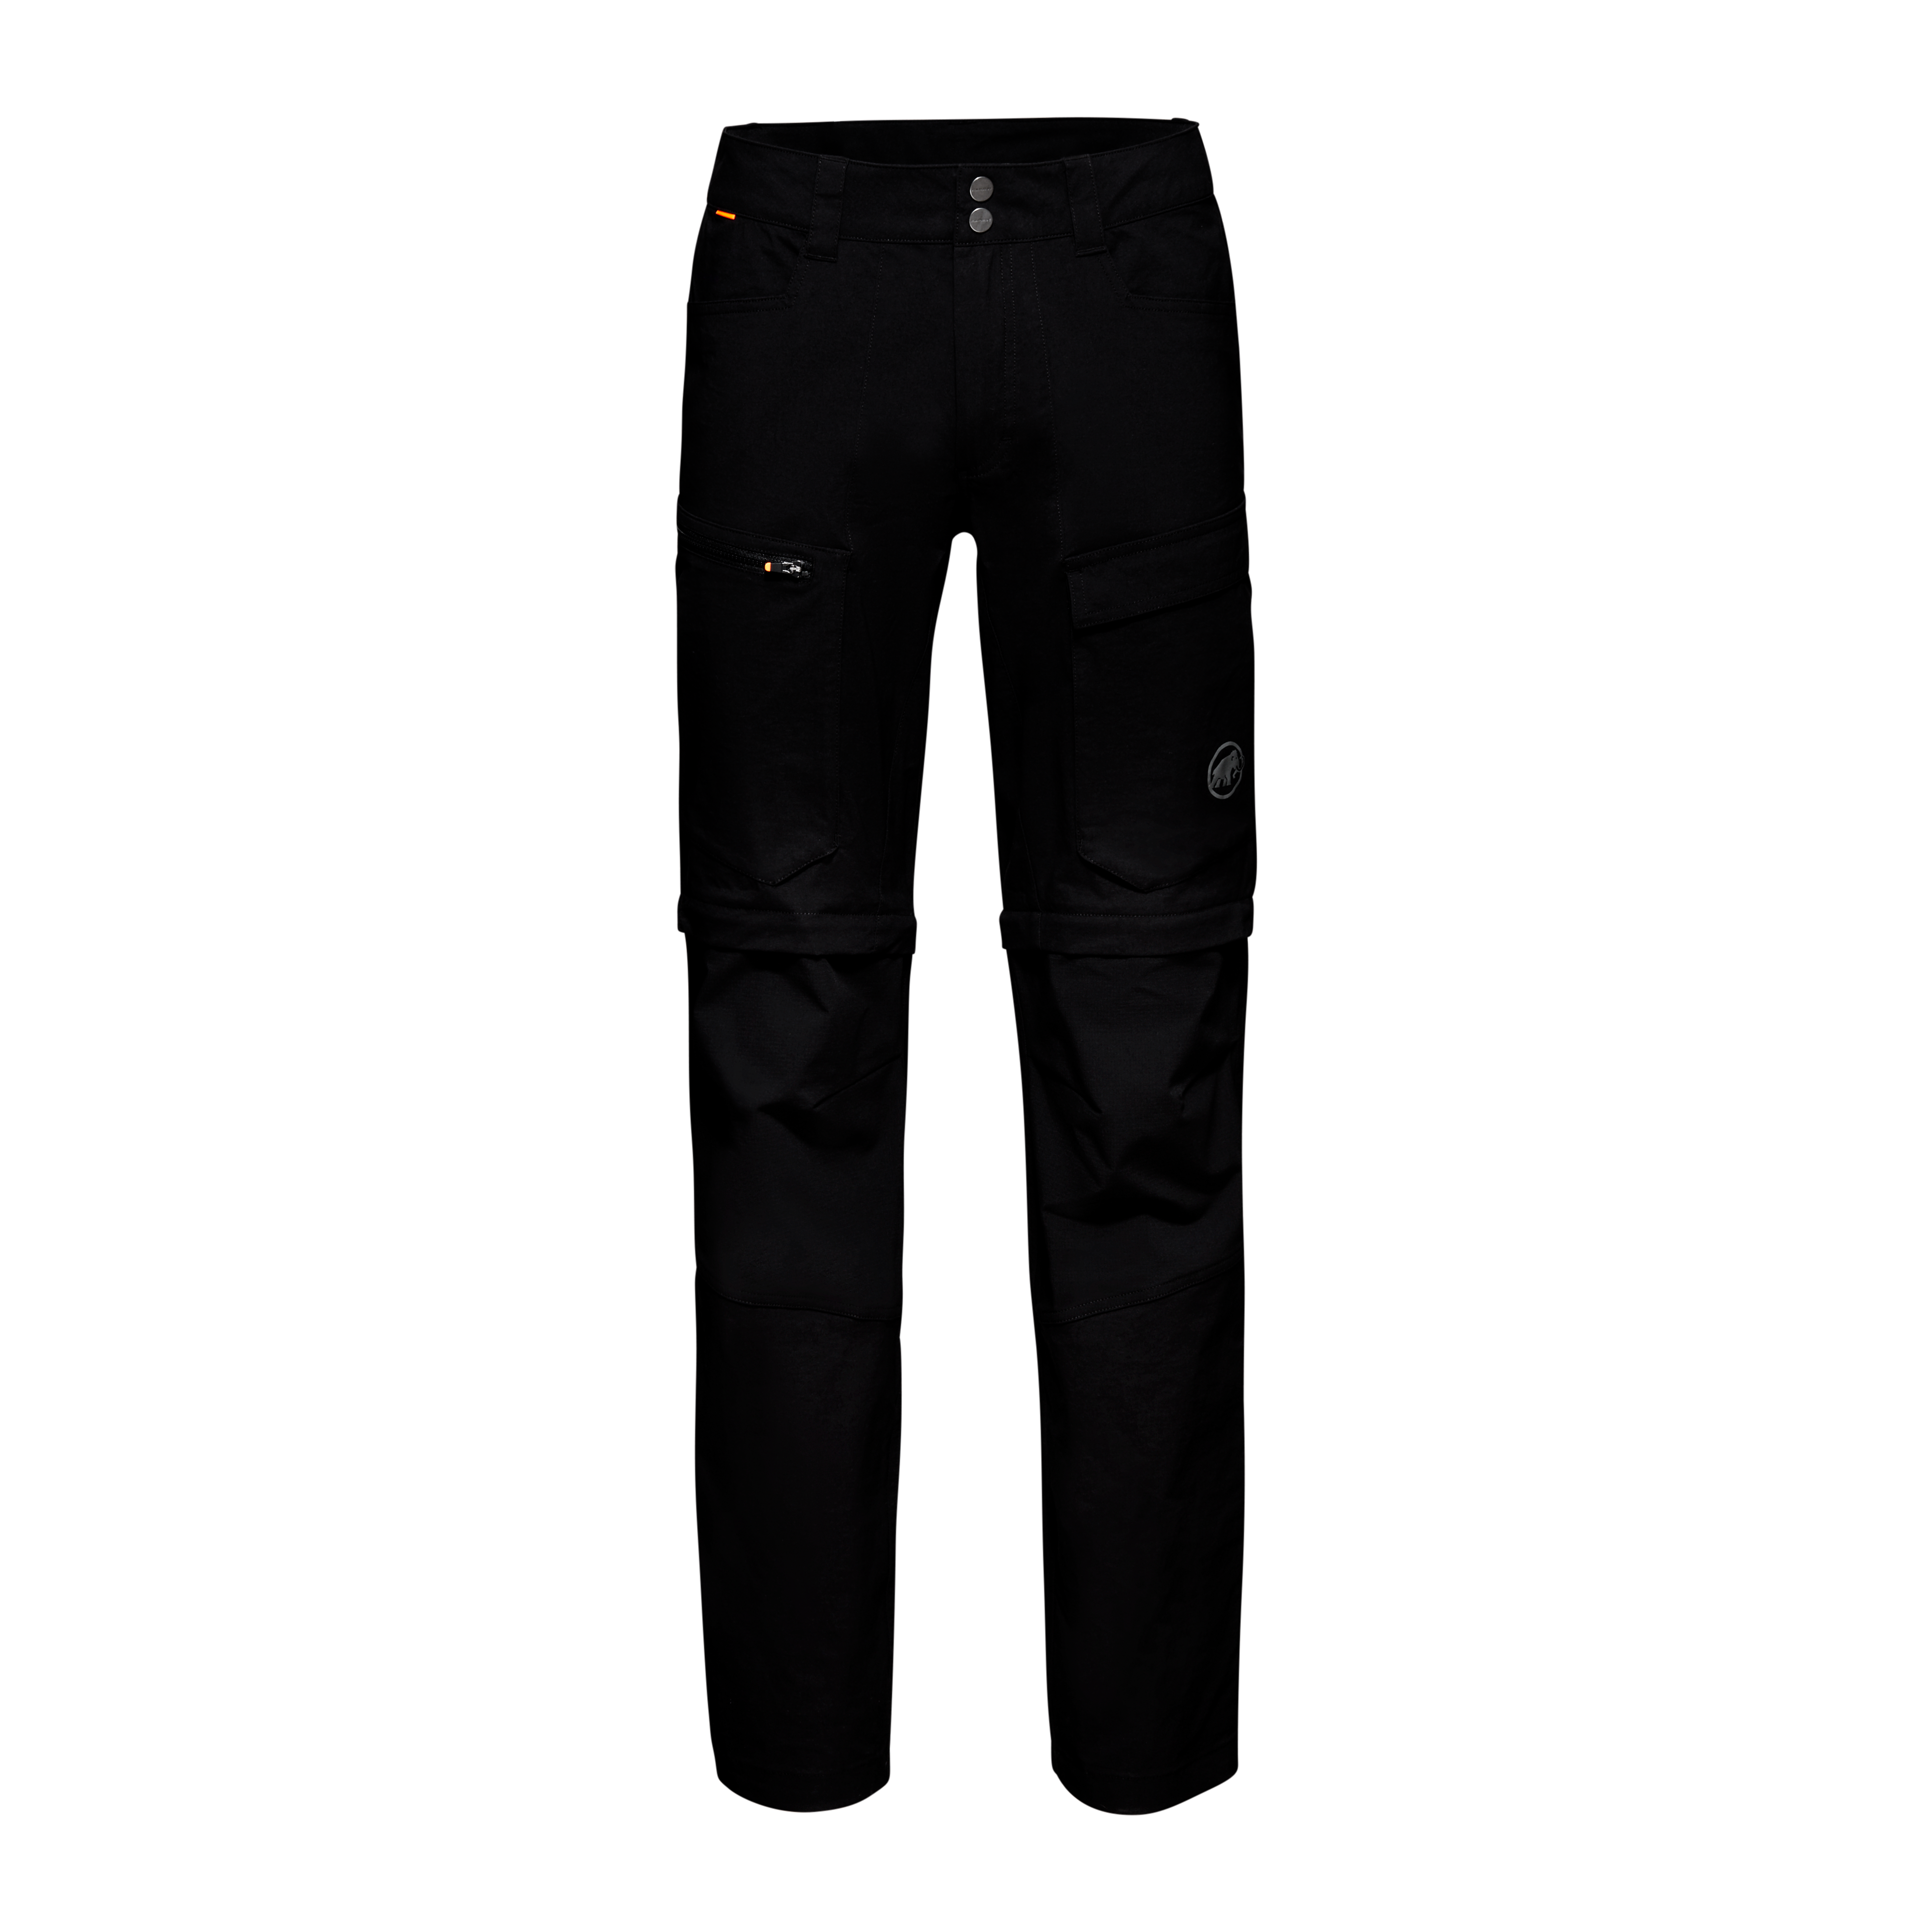 Zinal Hybrid Zip Off Pants Men - black, UK 28, normal thumbnail